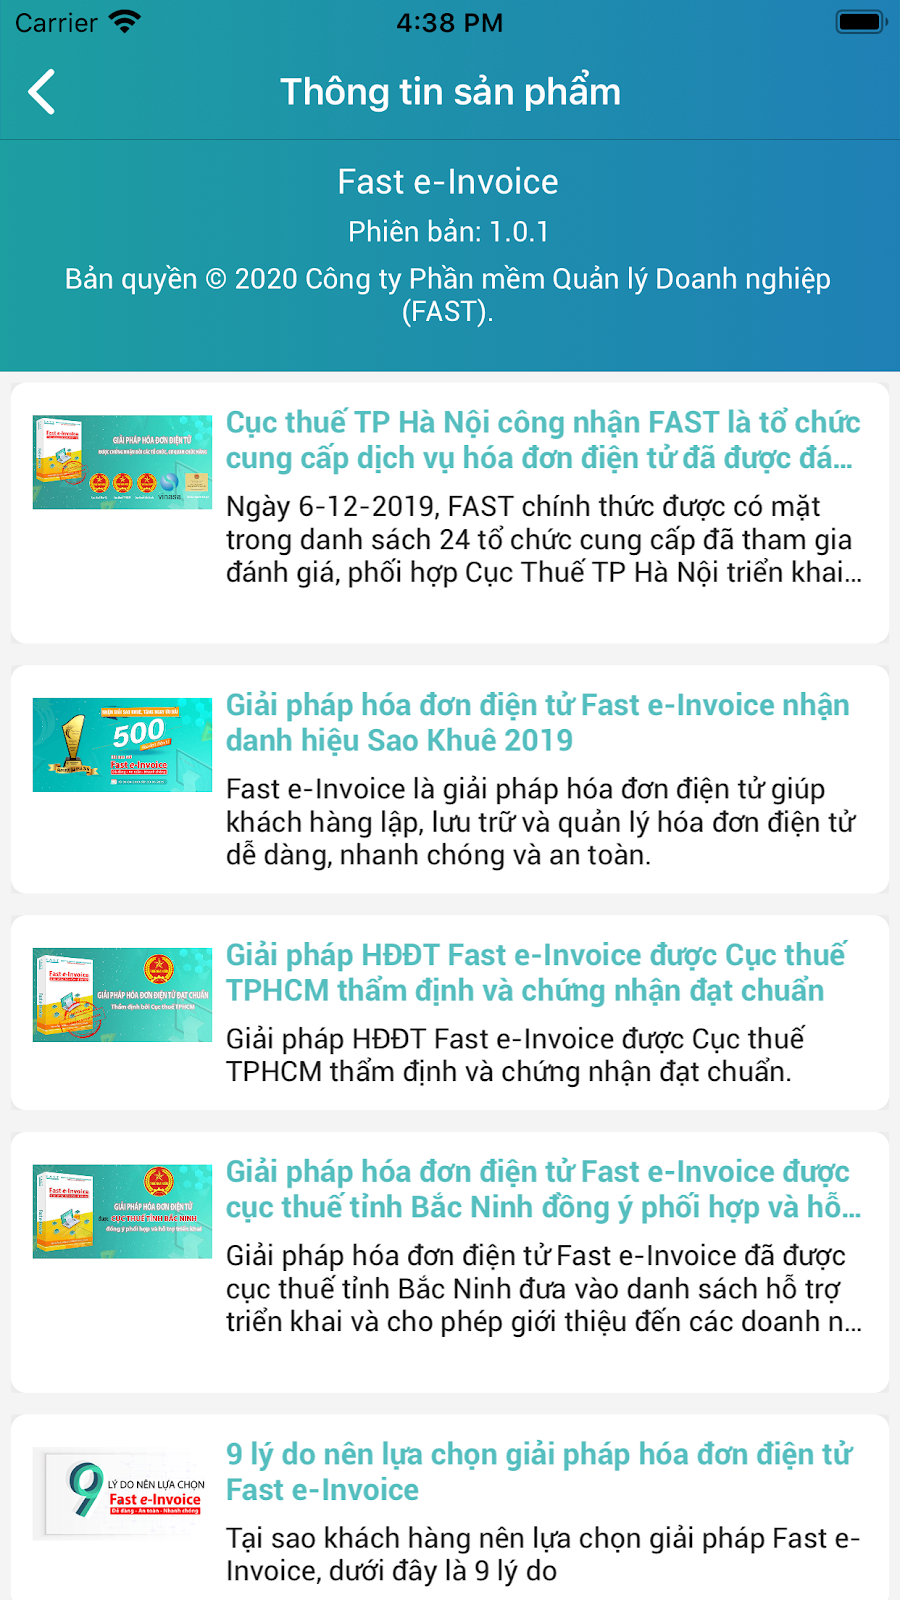 phien-ban-fast-invoice-mobile-app-2.jpg